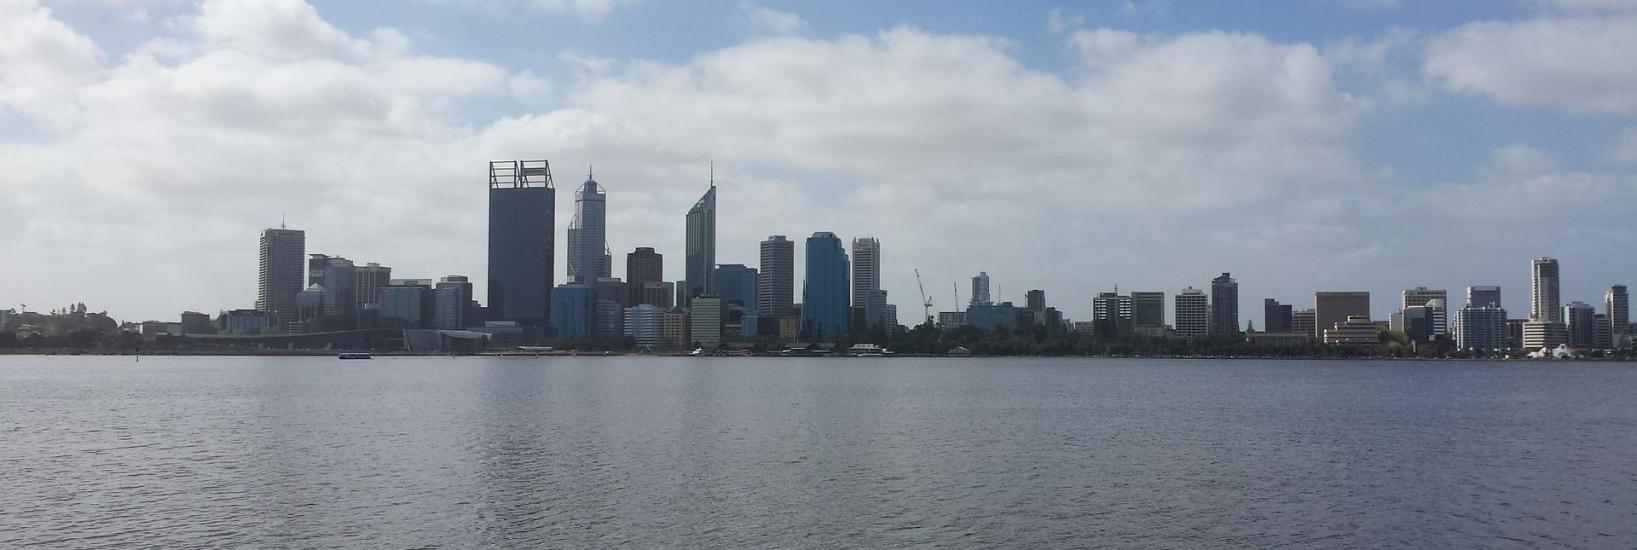 Perth Australien, Panorama, Blick vom Meer